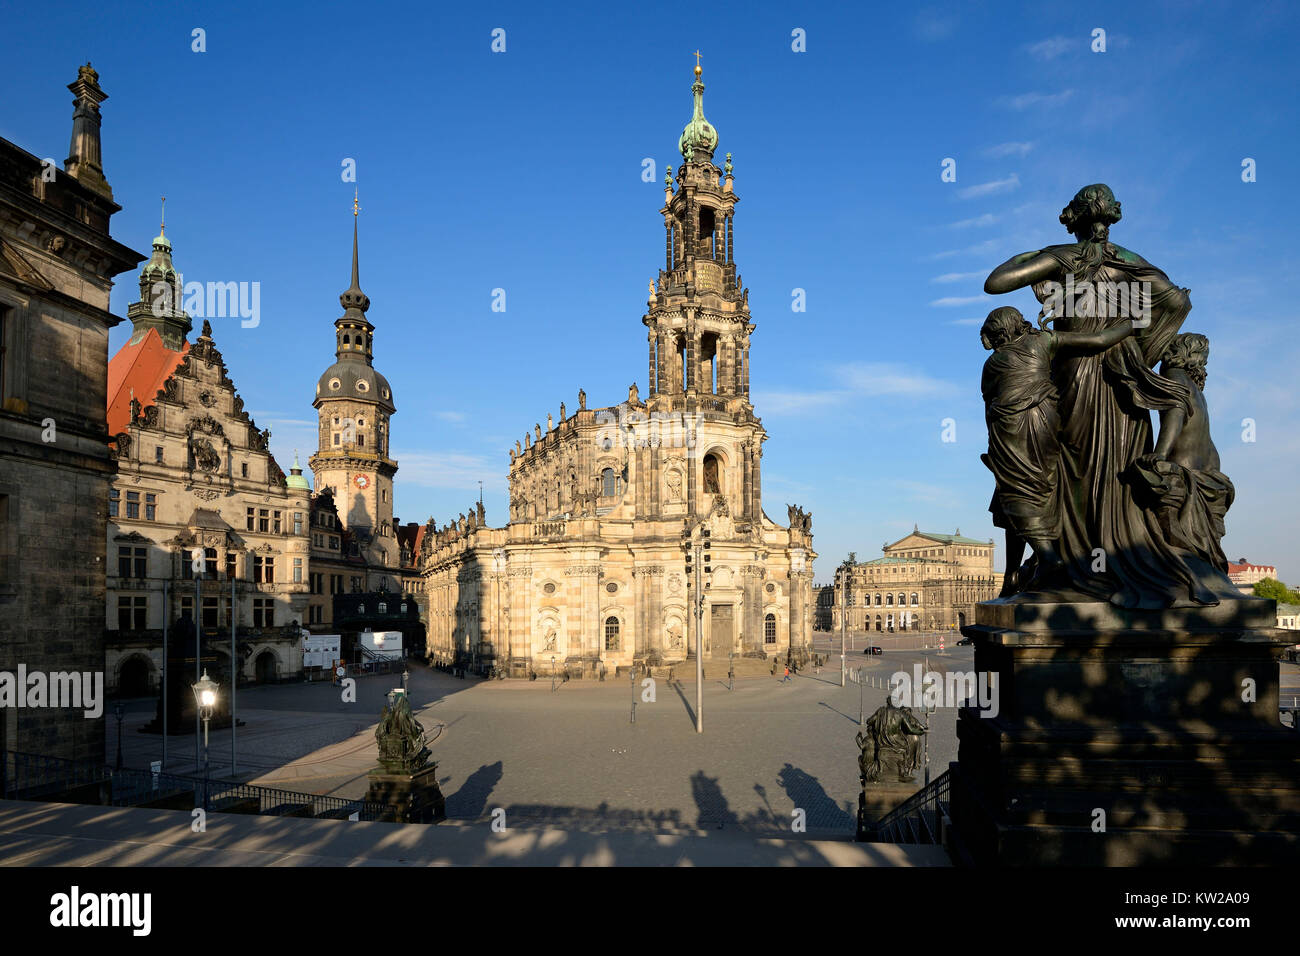 A Dresda, piazza Castello ensemble, Schlossplatzensemble Foto Stock